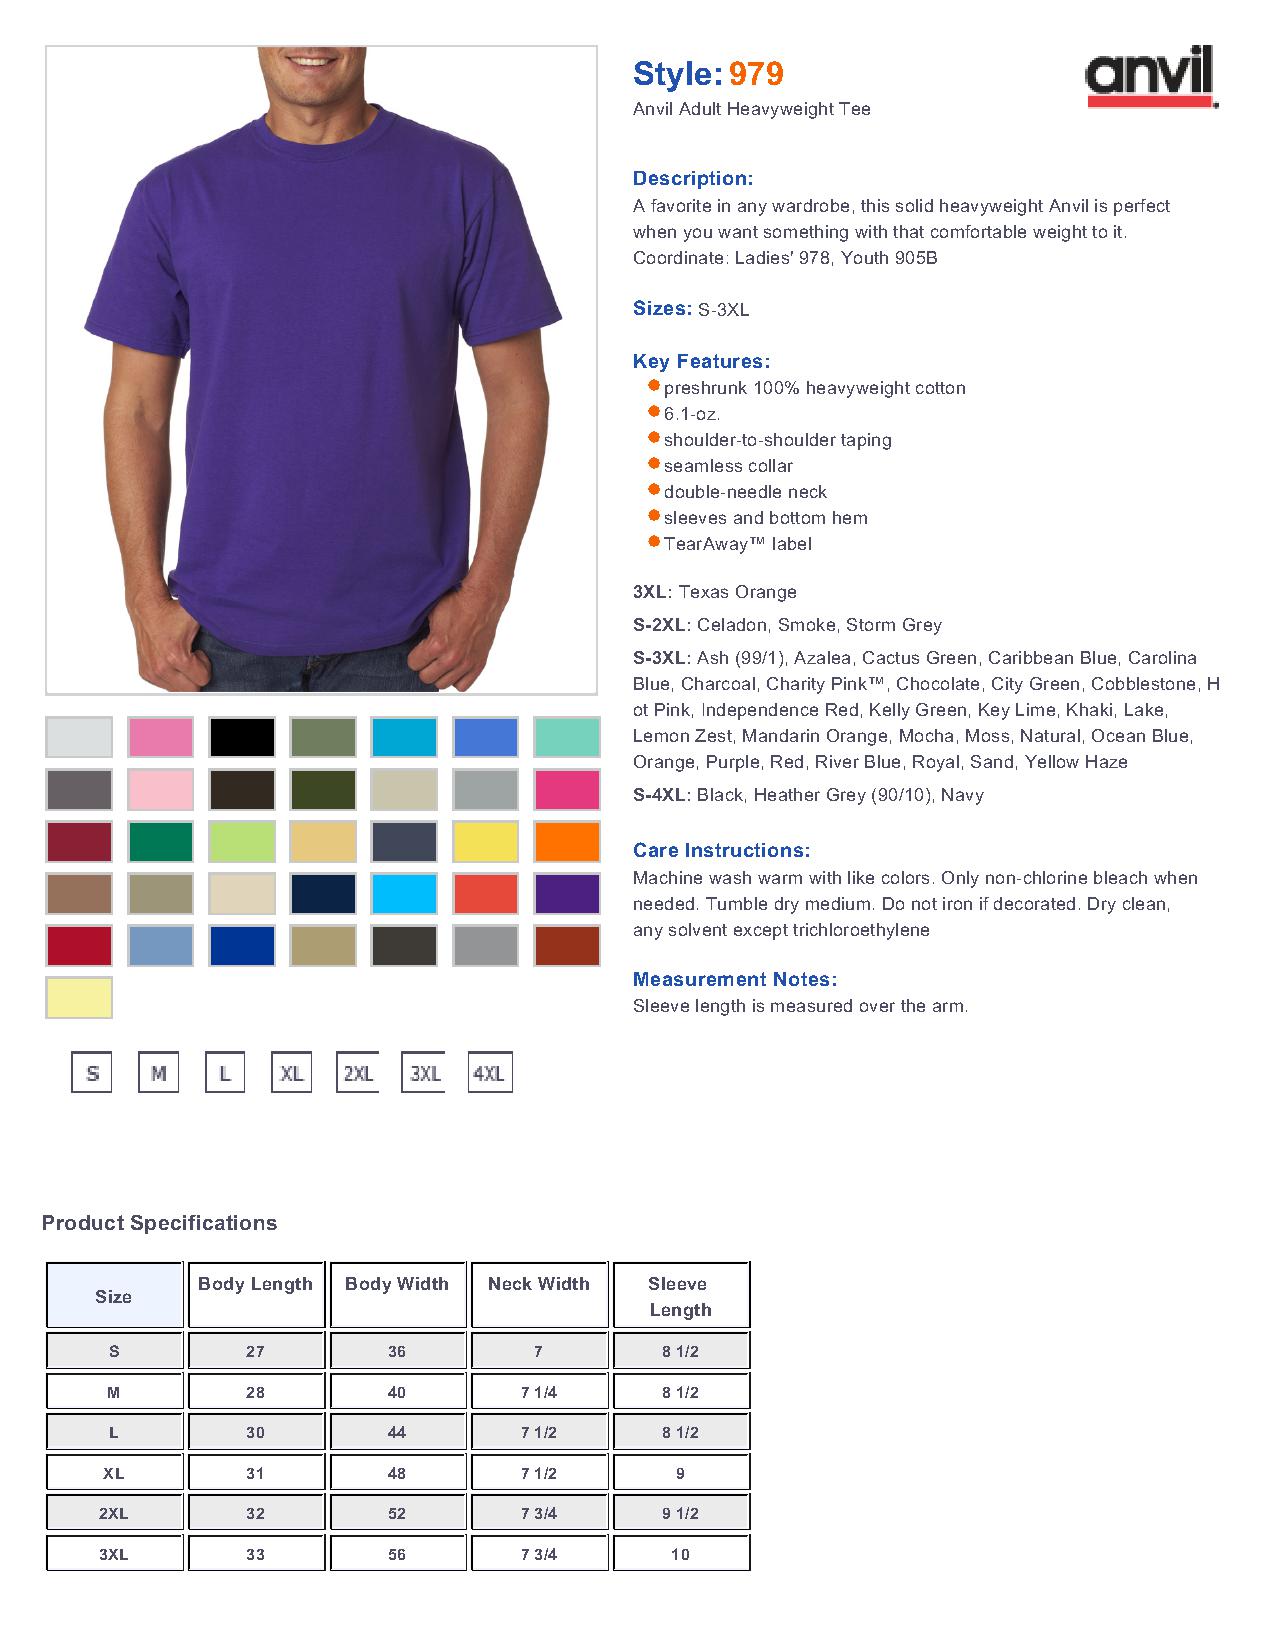 Anvil 979 Men's Basic Cotton T-Shirt $3.09